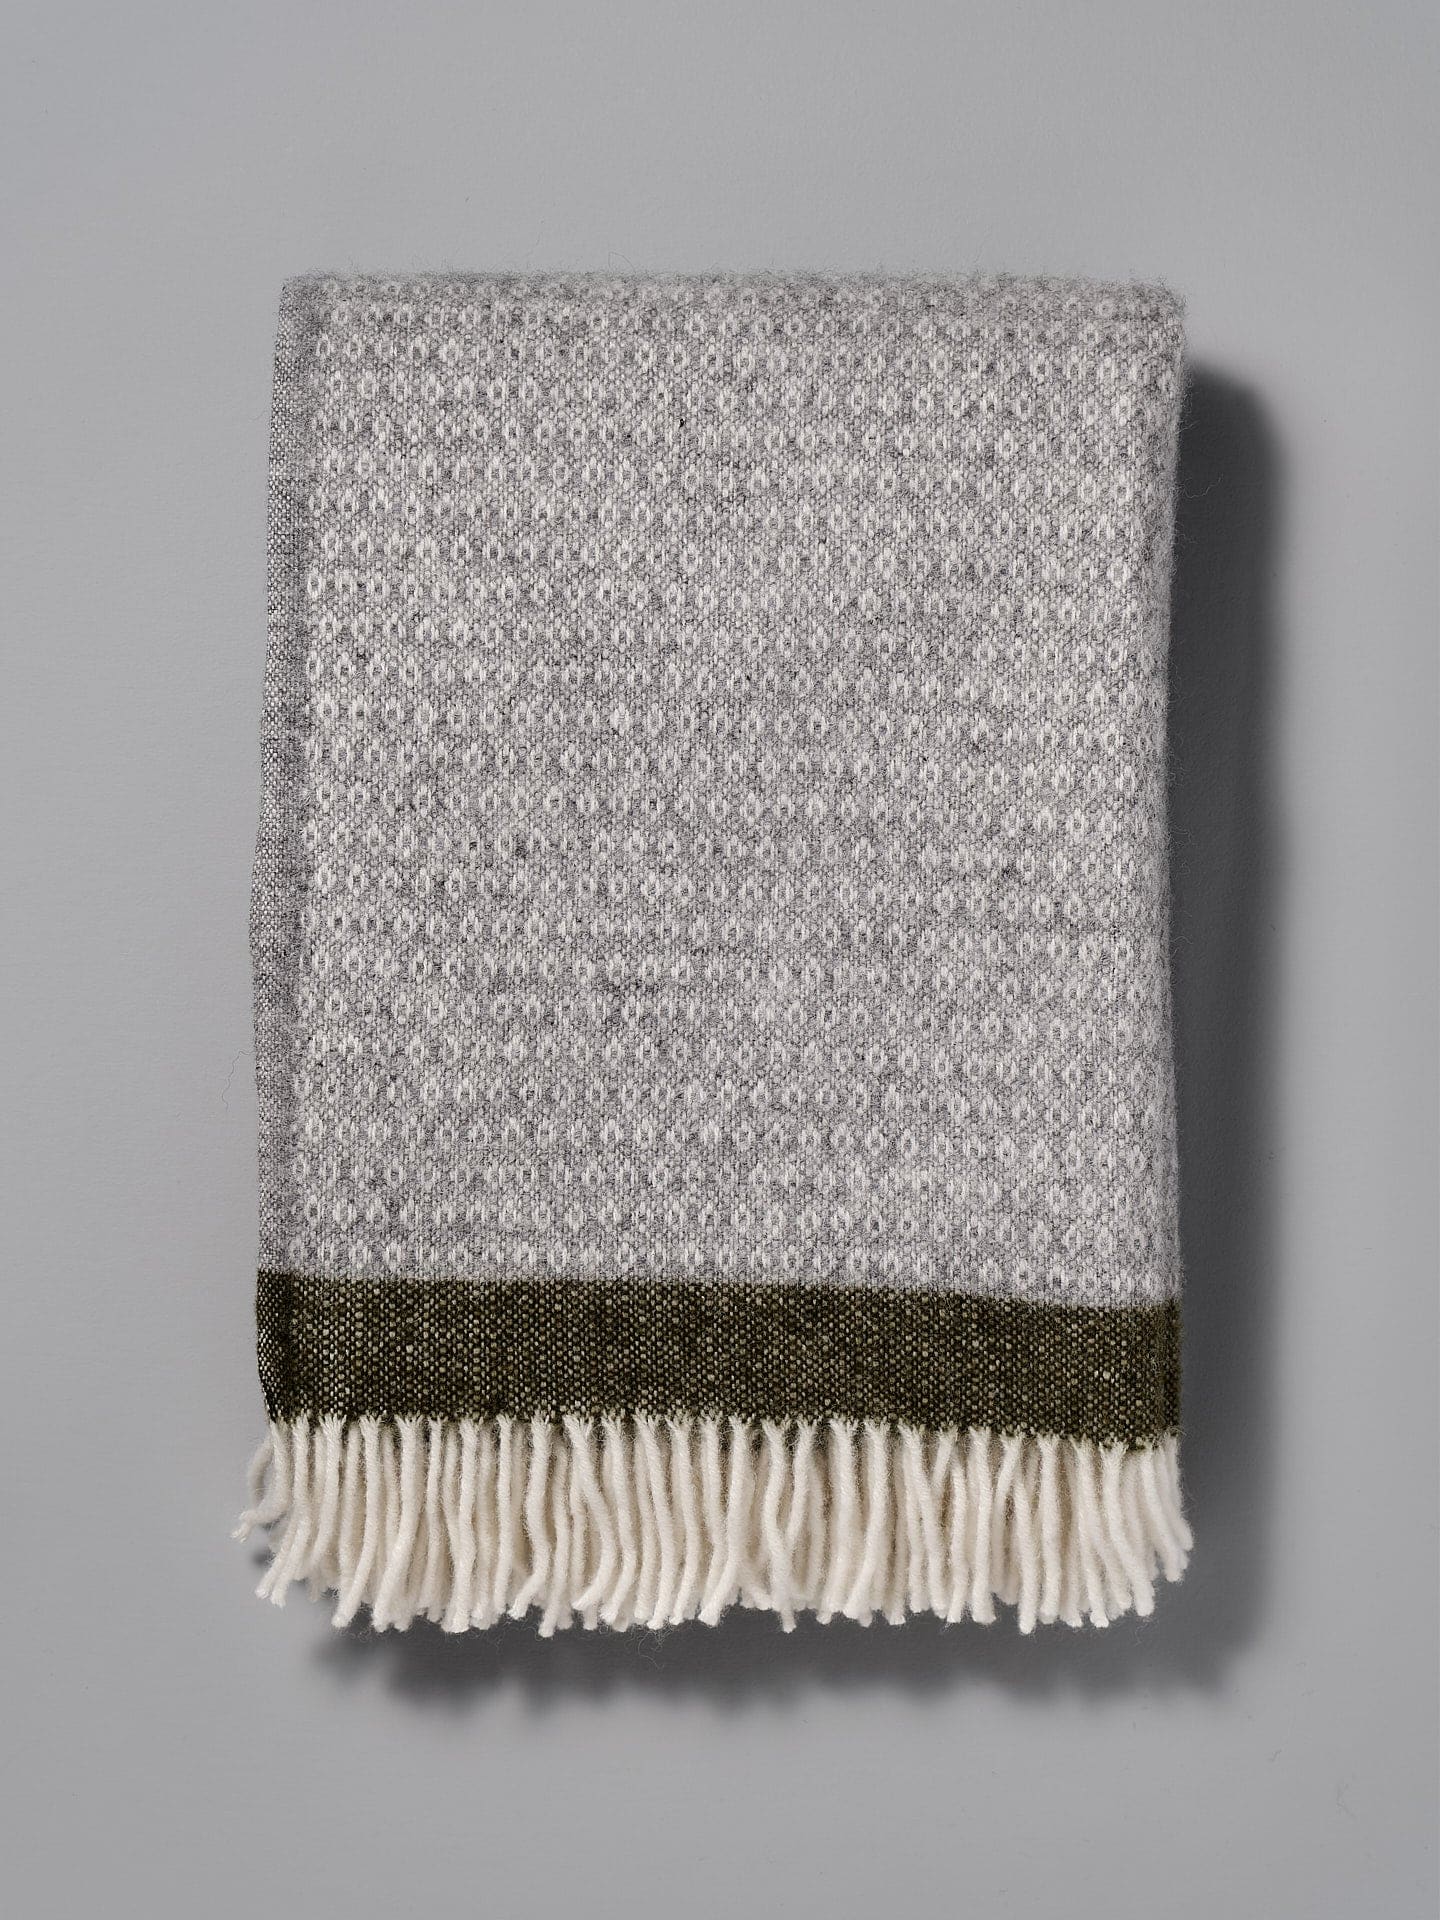 A Klippan Hampus Wool Throw - Grey Green with fringes.